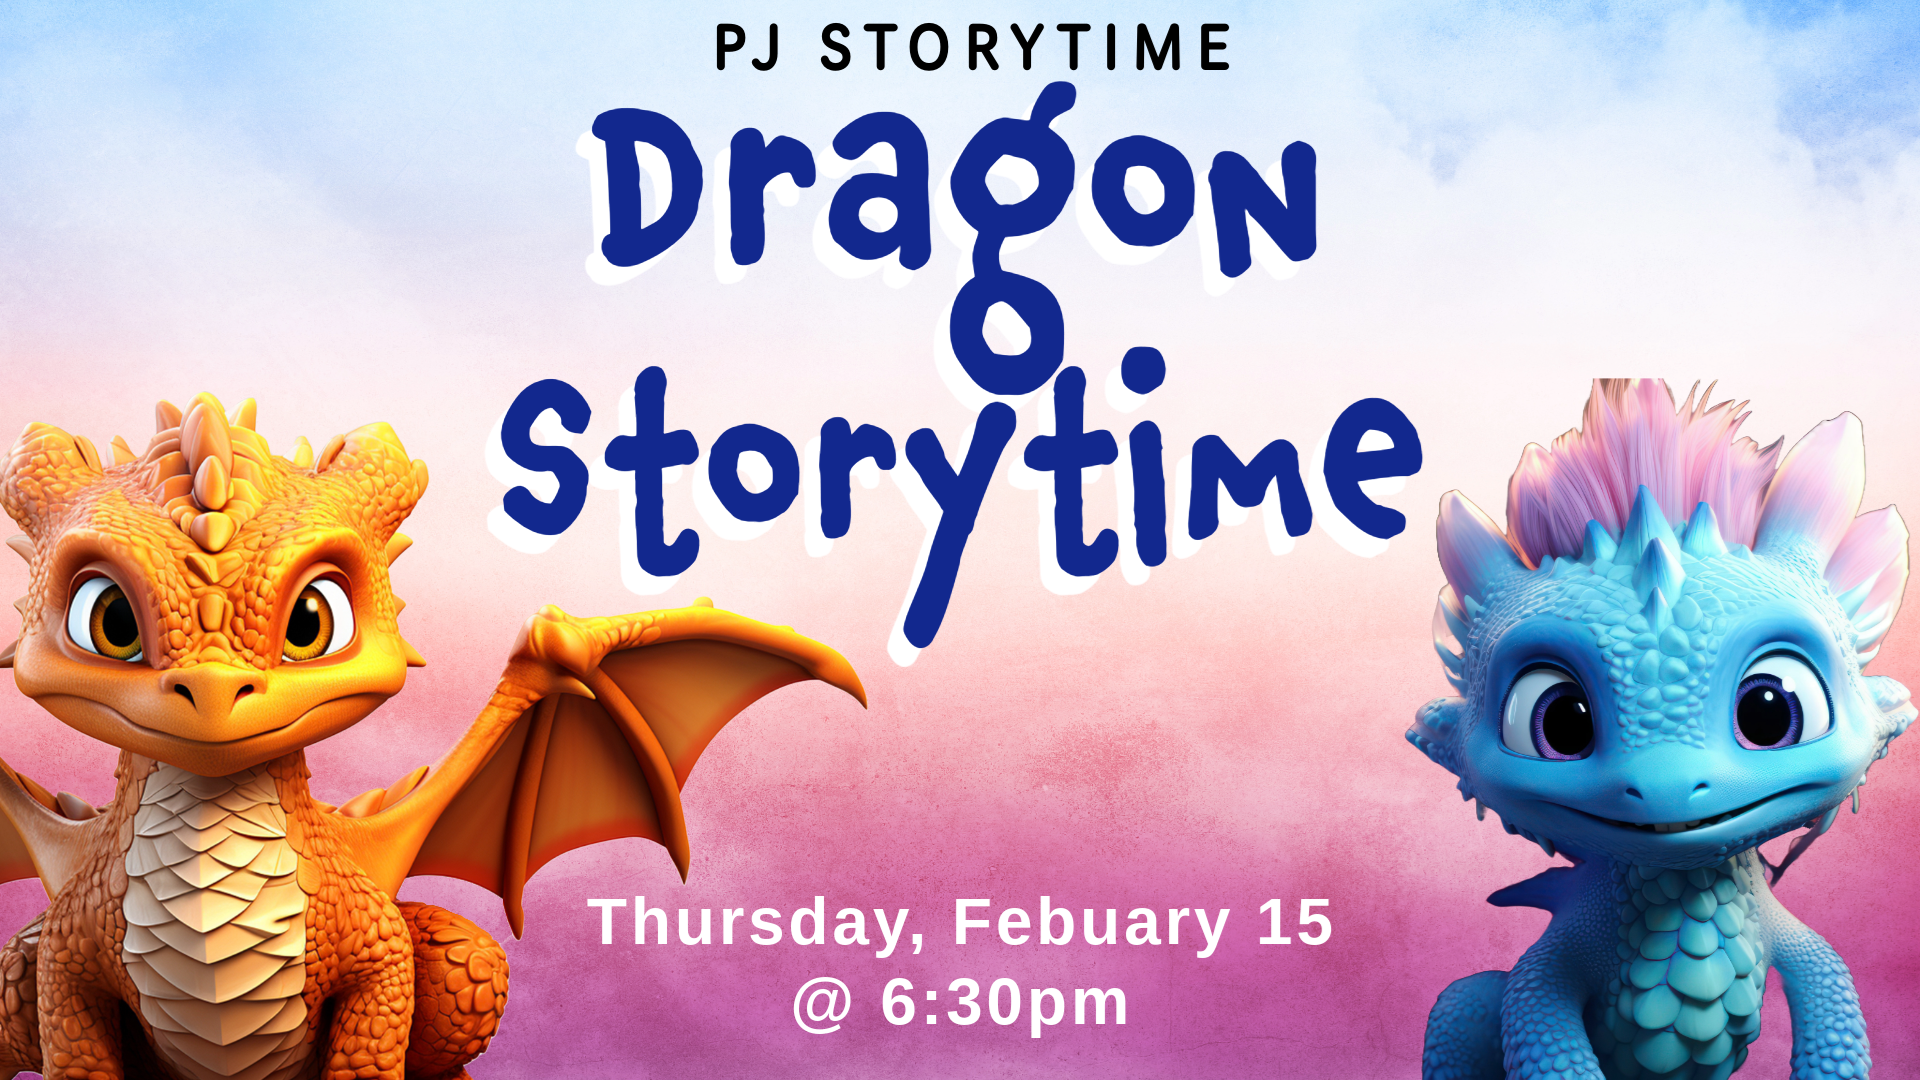 PJ Storytime Dragon Storytime Thursday, February 15 @ 6:30 PM